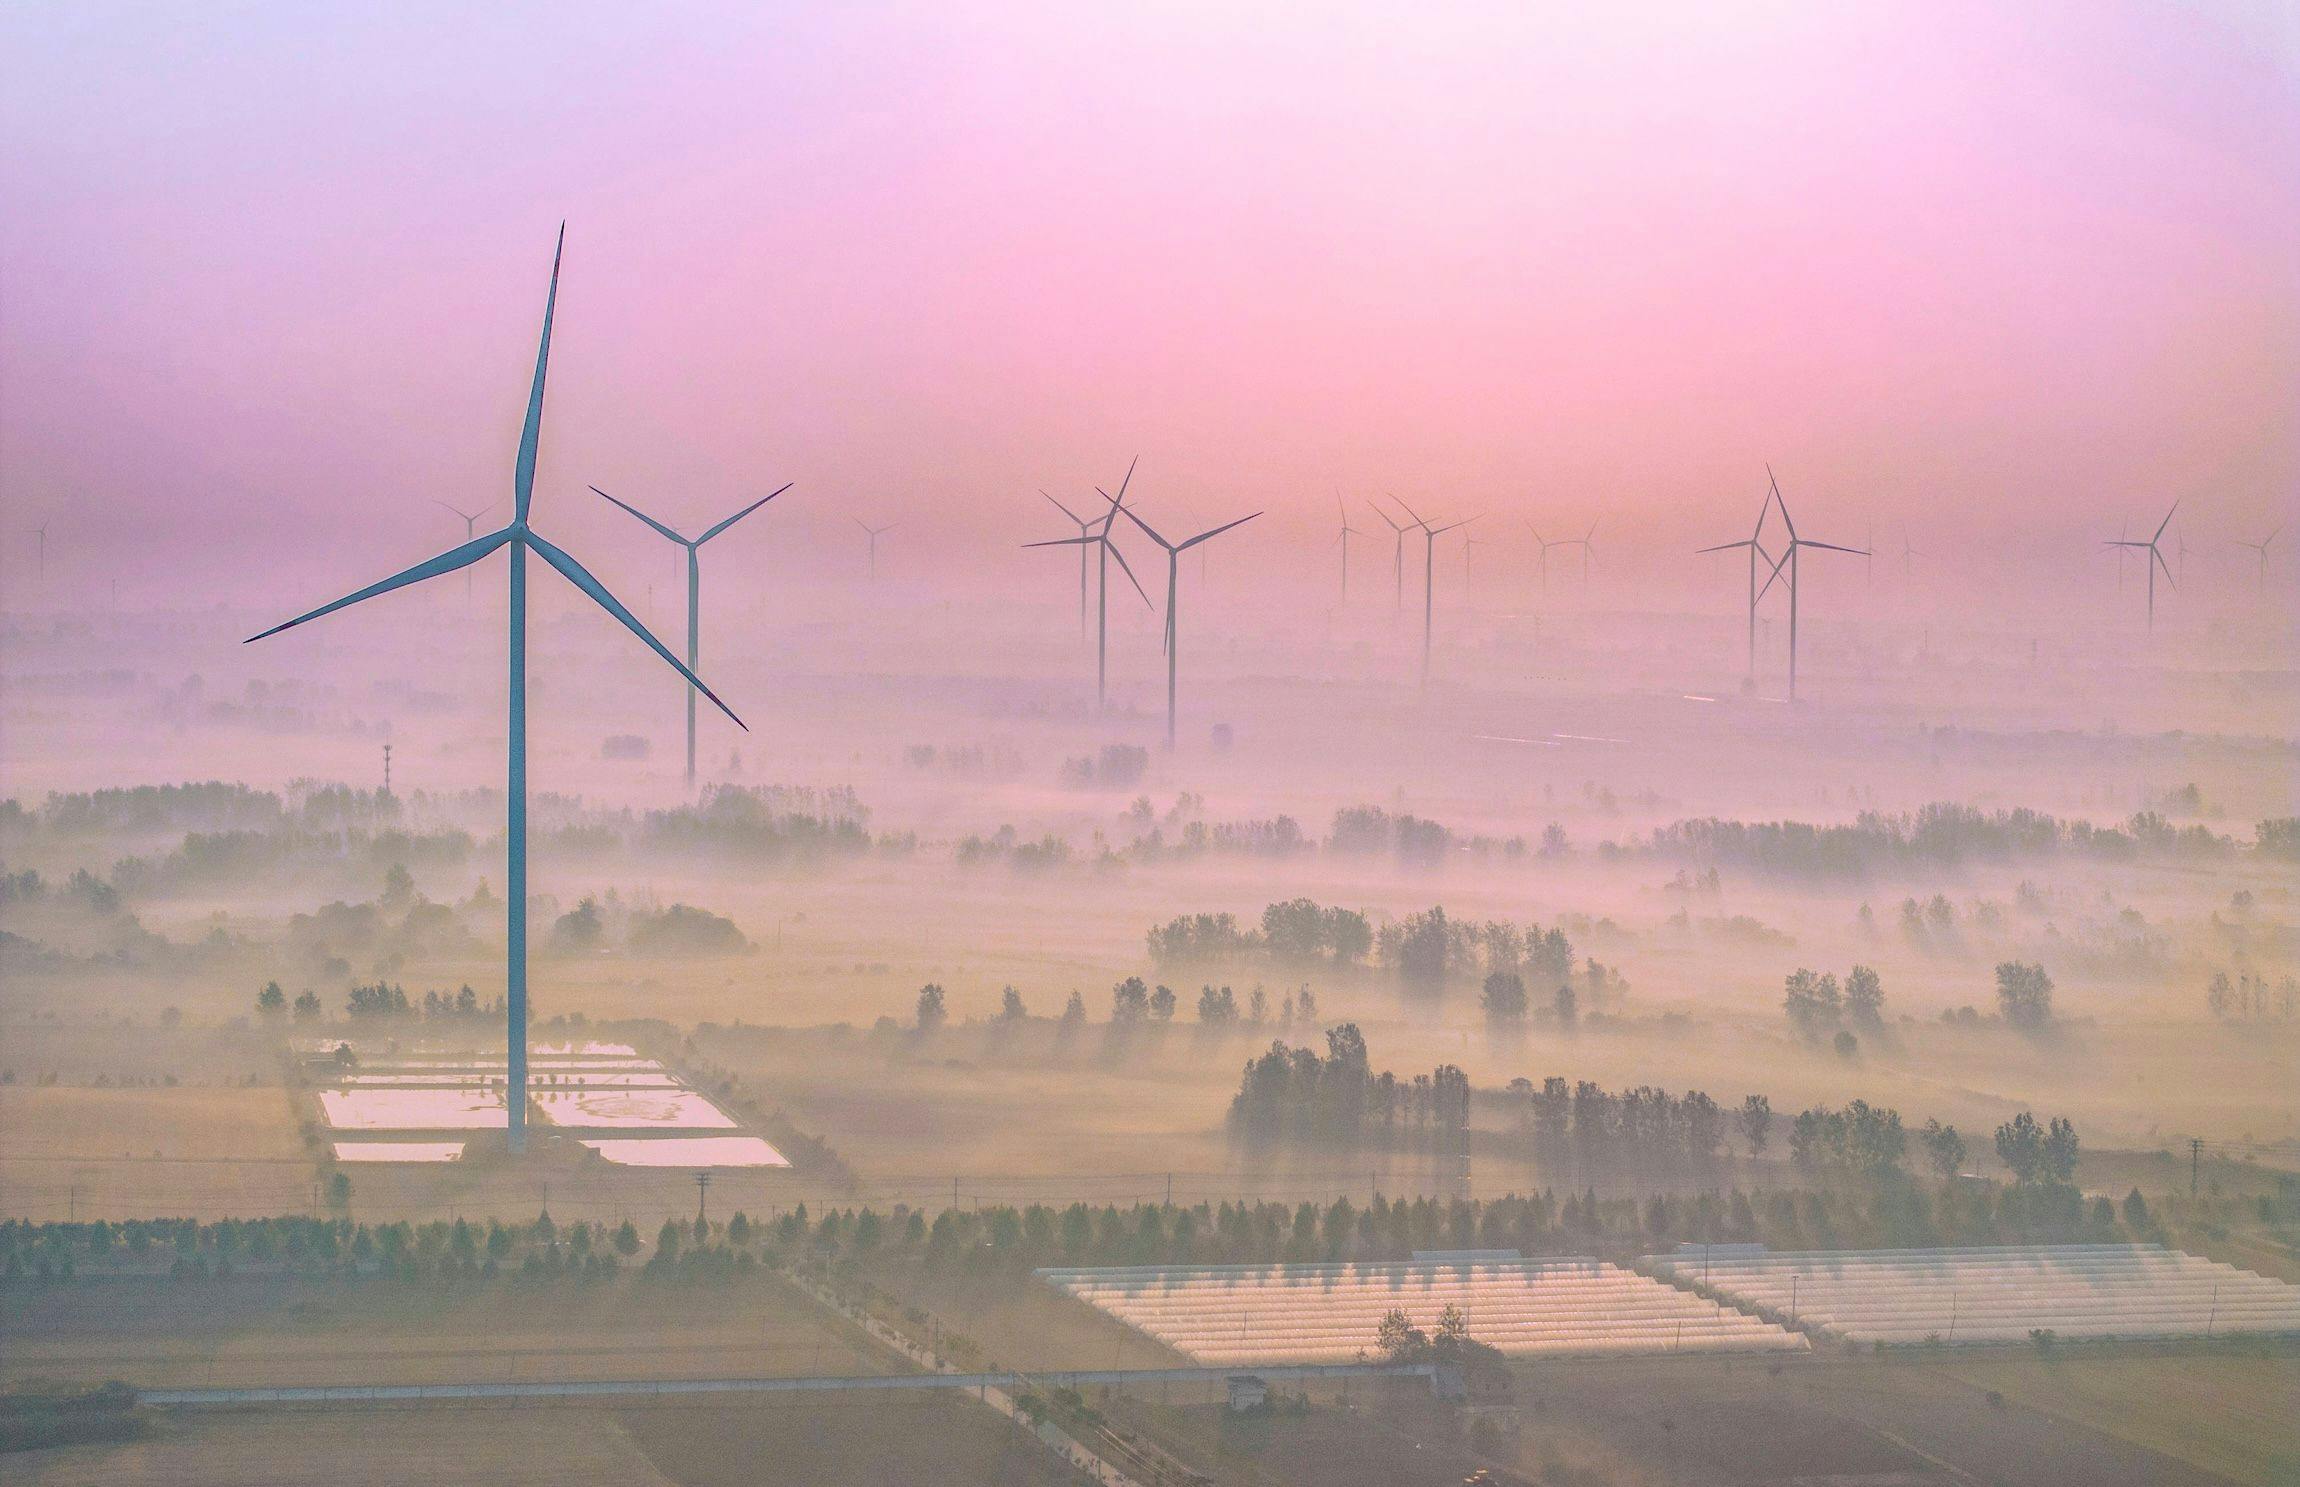 Windkraftanlagen, Dörfer und Bäume im Nebel in der Stadt Shangtang, Suqian City, Provinz Jiangsu, China